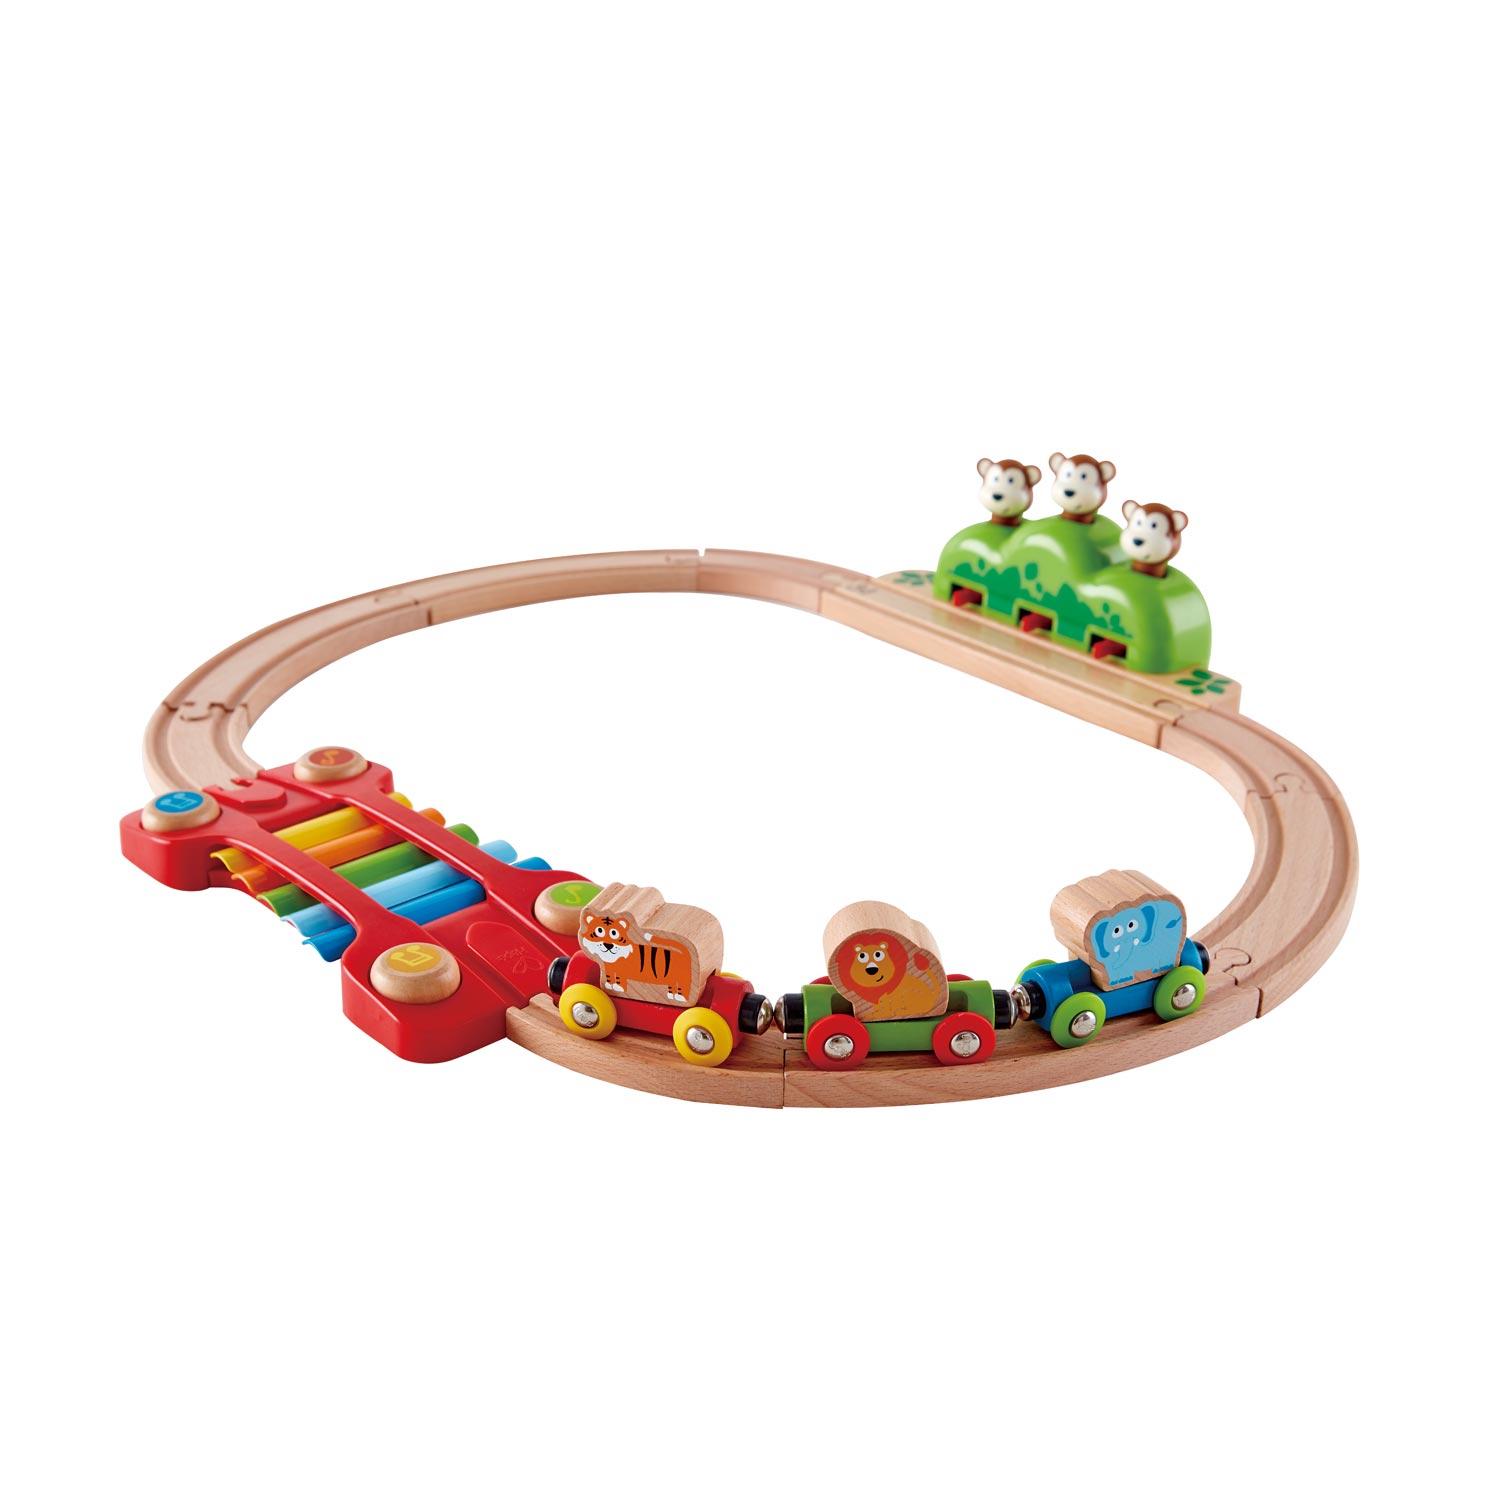 Hape Music and Monkeys Rail Set. Oval railway set with train and animal figures.